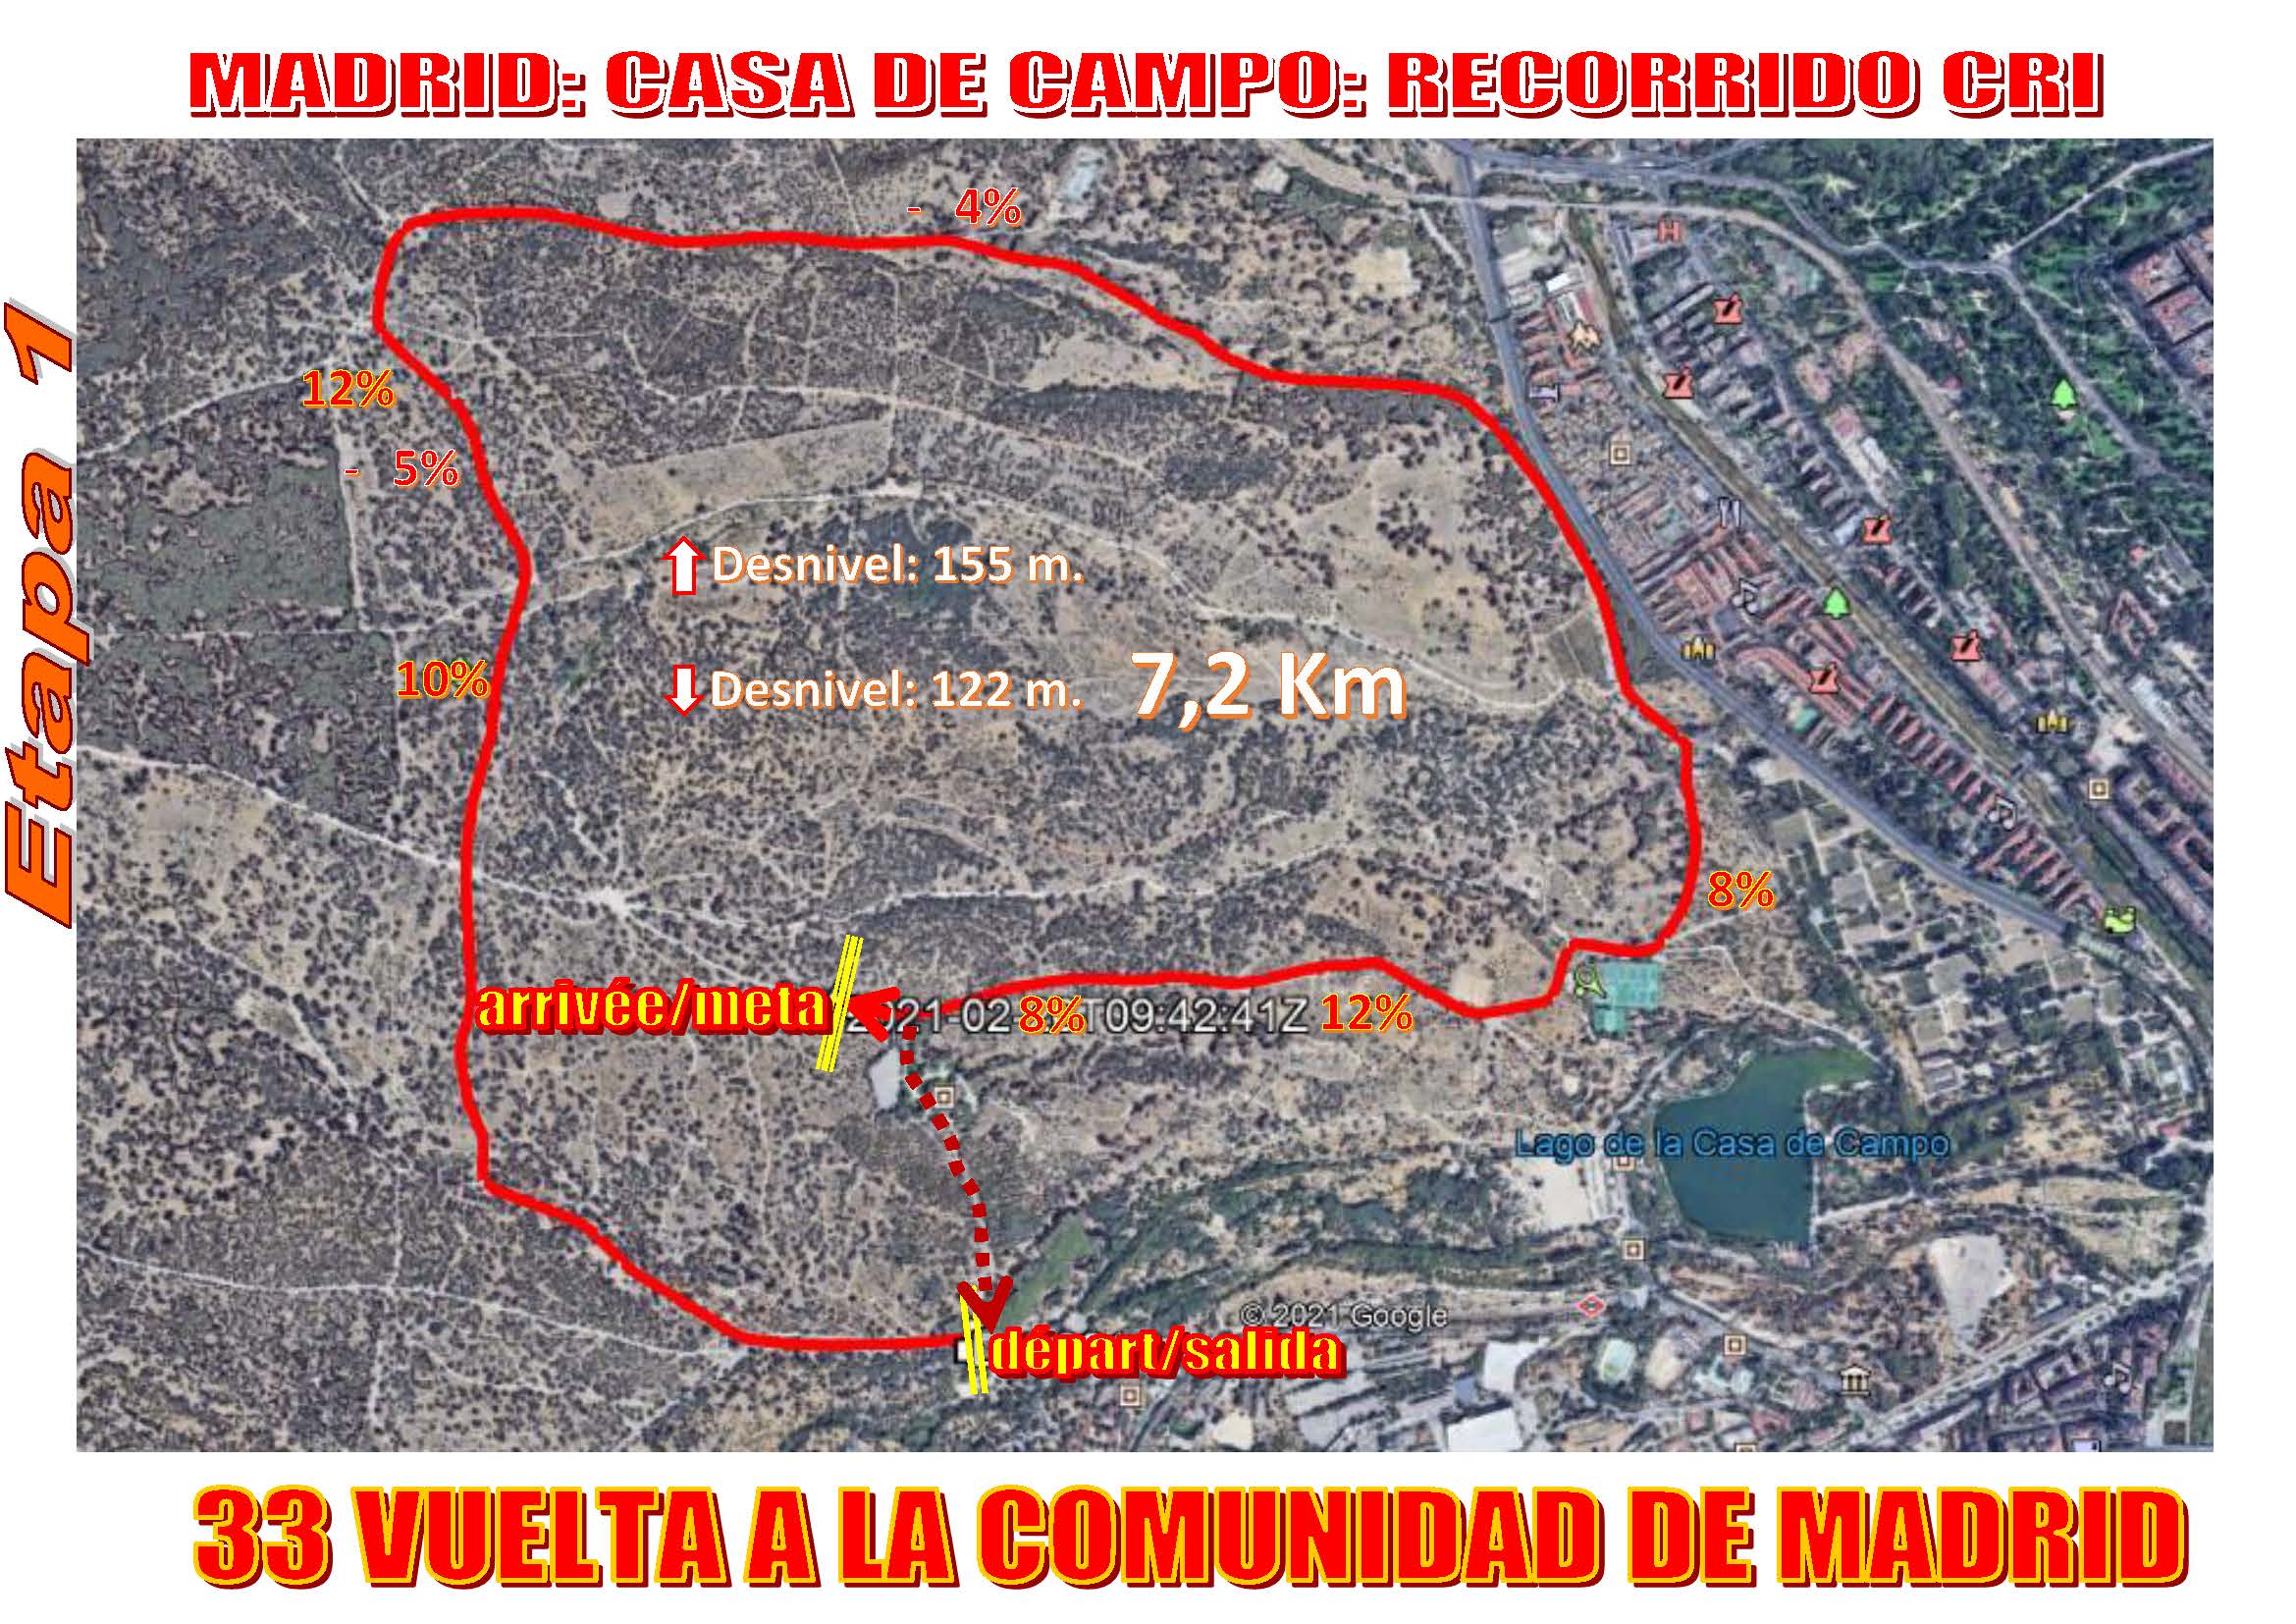 Desglosamos las etapas de la XXXIII Vuelta a la Comunidad de Madrid sub23